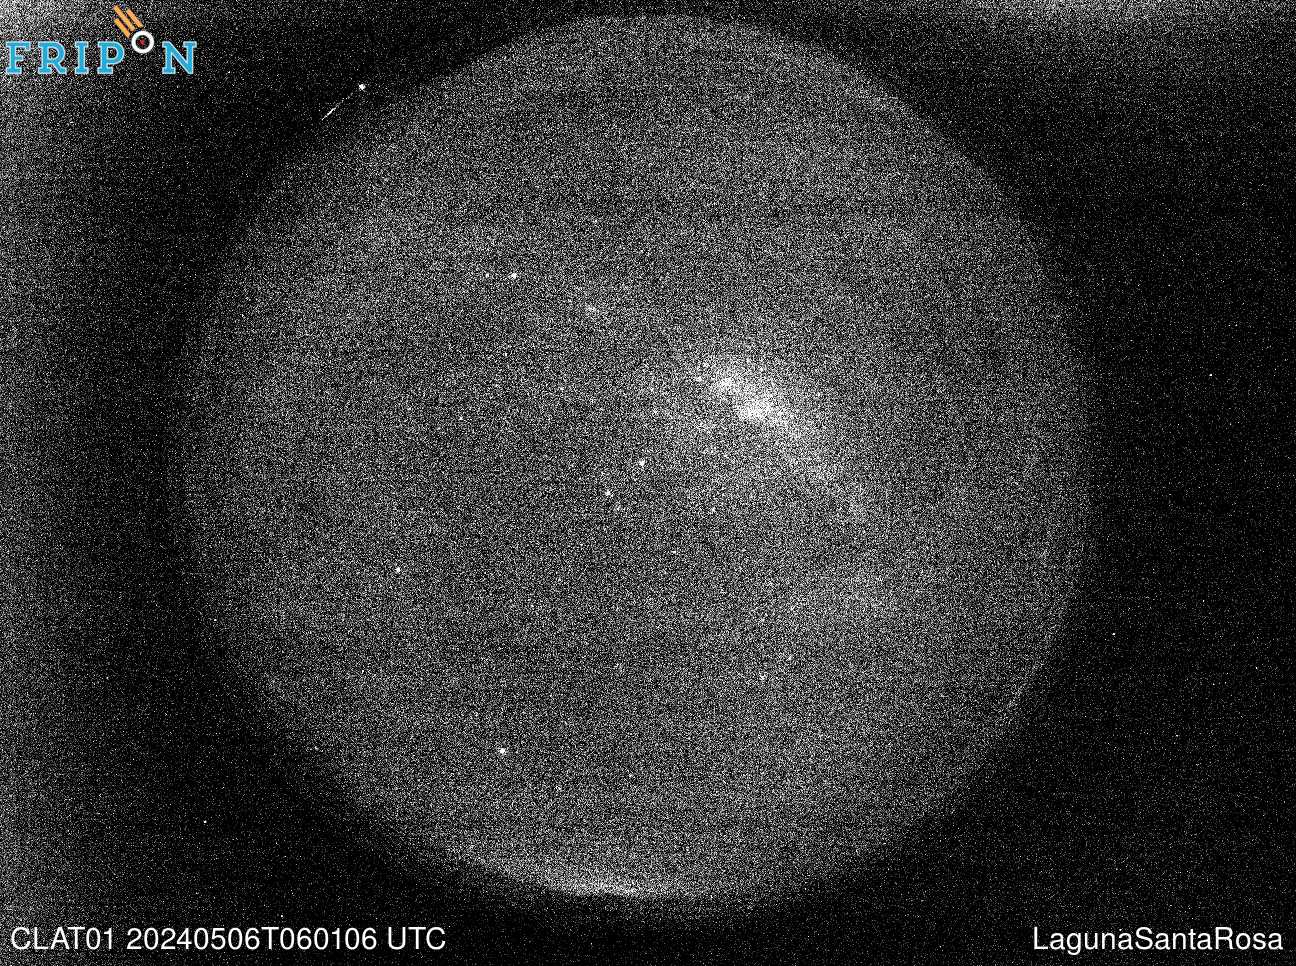 Full size image detection Laguna Santa Rosa (CLAT01) Universal Time